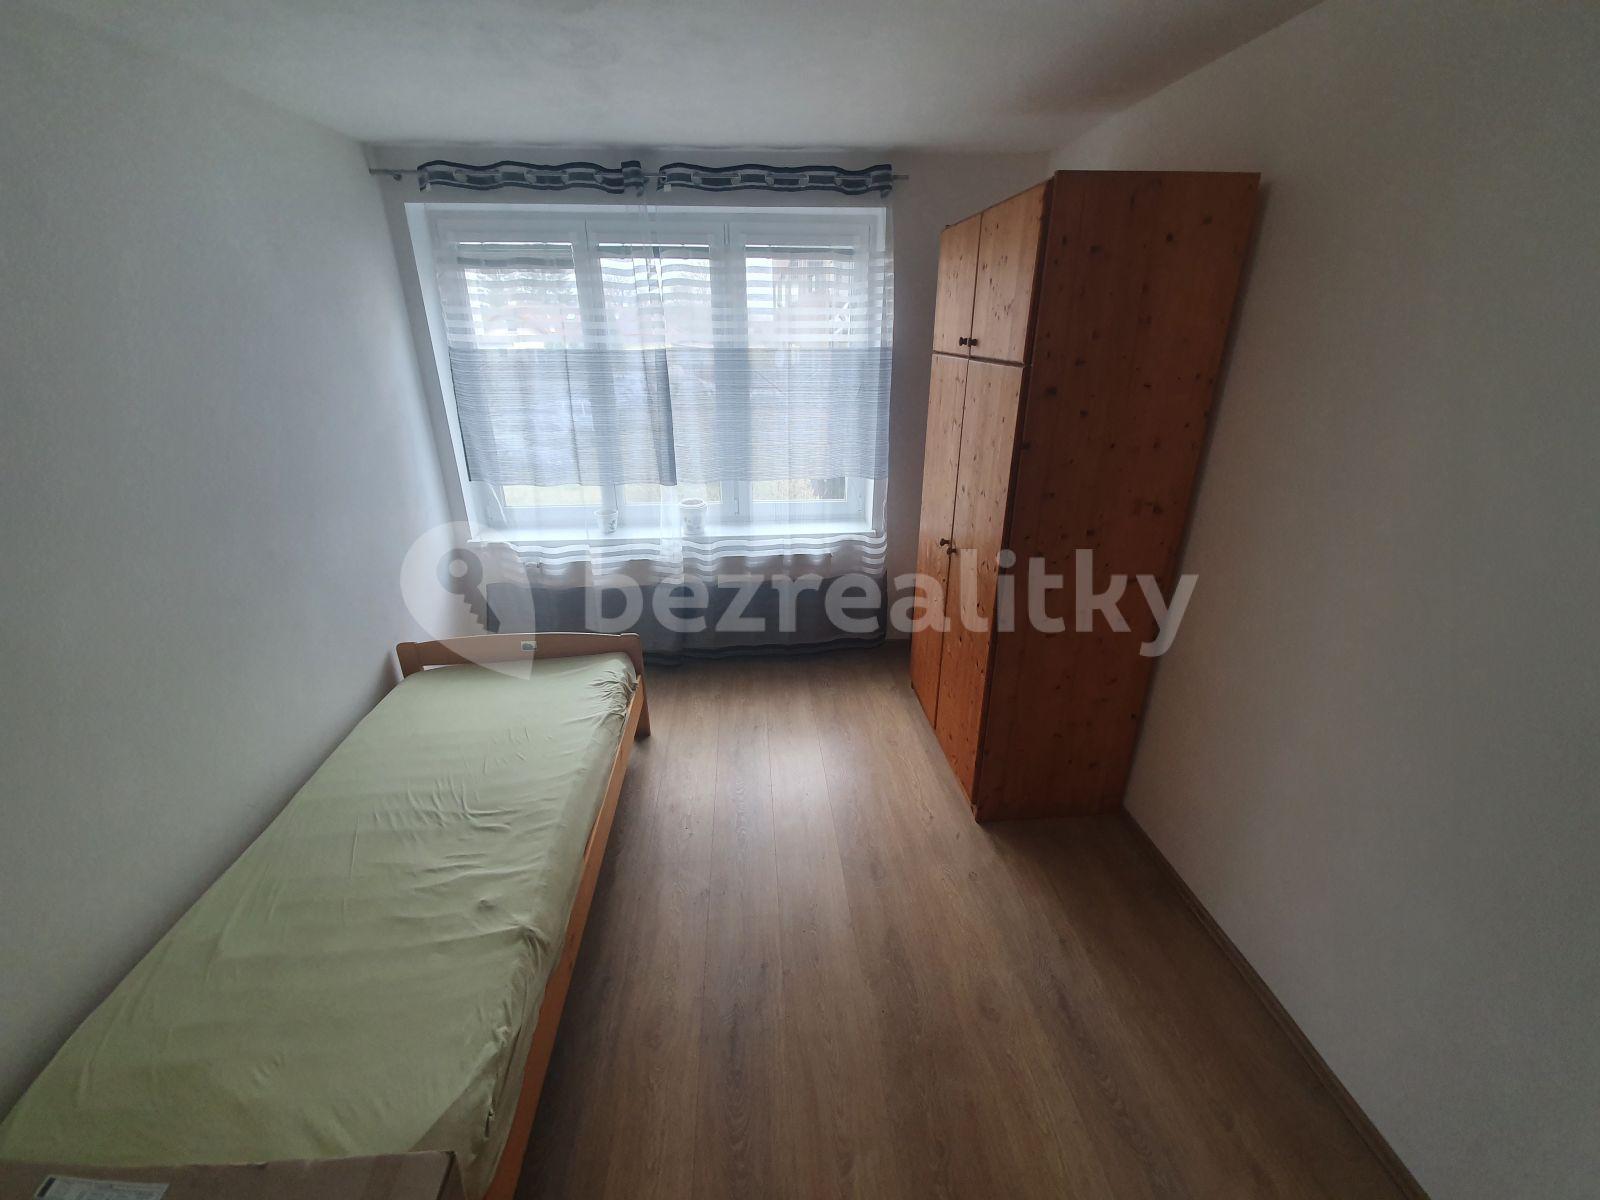 1 bedroom with open-plan kitchen flat to rent, 58 m², Pavlovova, Jihlava, Vysočina Region